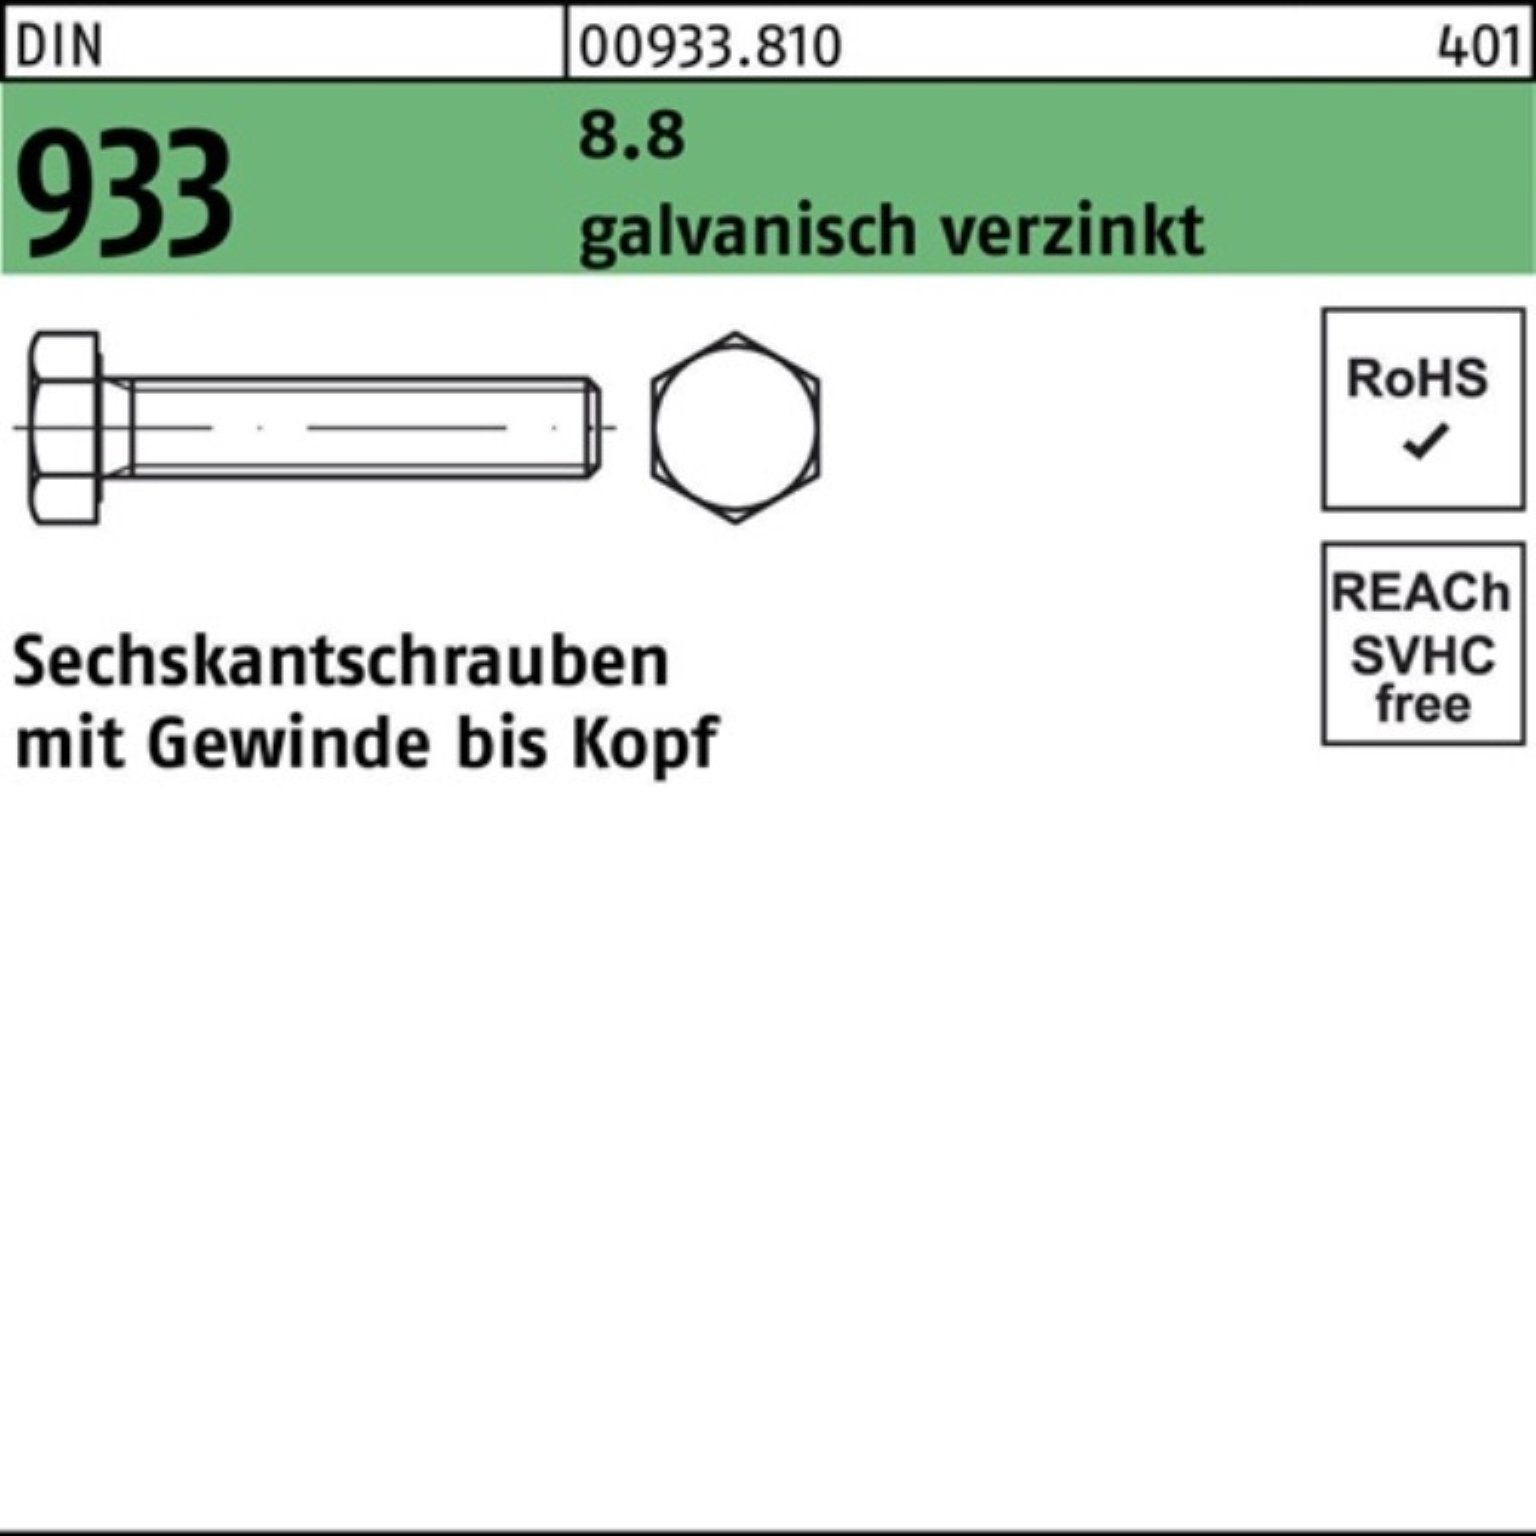 Reyher Sechskantschraube 100er Sechskantschraube 933 DIN 8.8 M8x Pack VG 100 95 Stü galv.verz